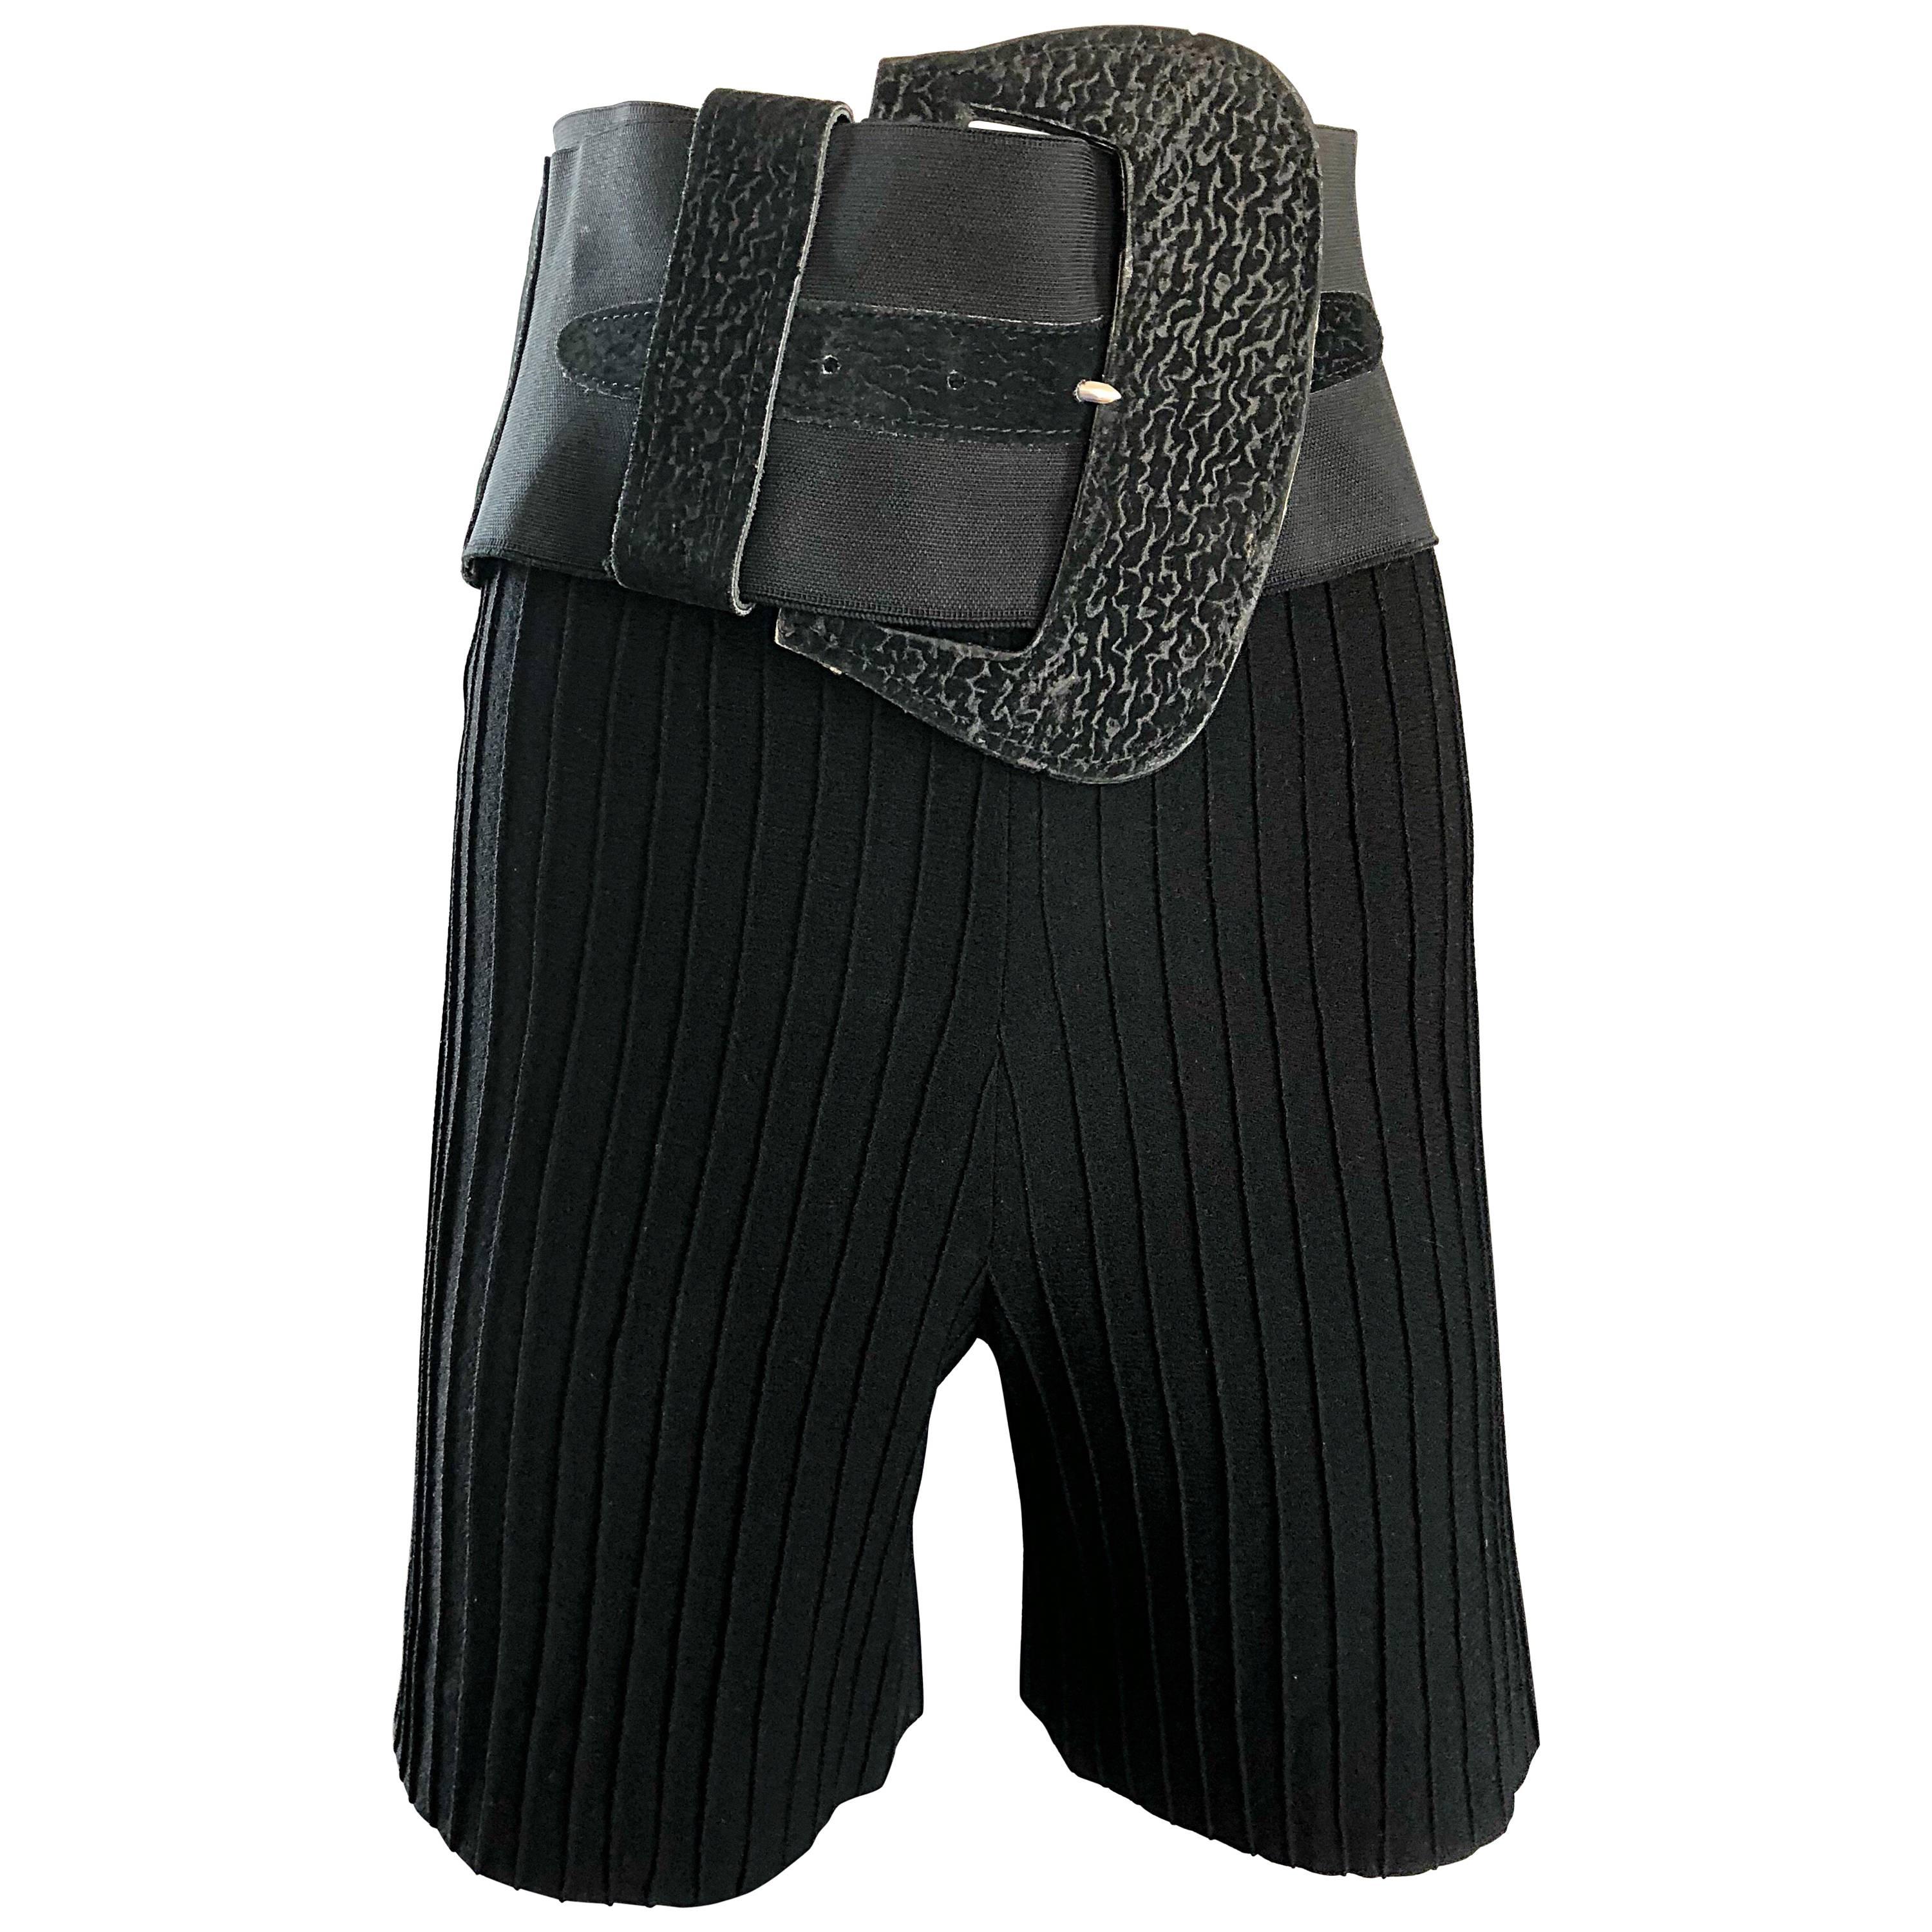 Cardinali Original Sample Black Wool High Waisted 1960s Shorts and Belt Set For Sale